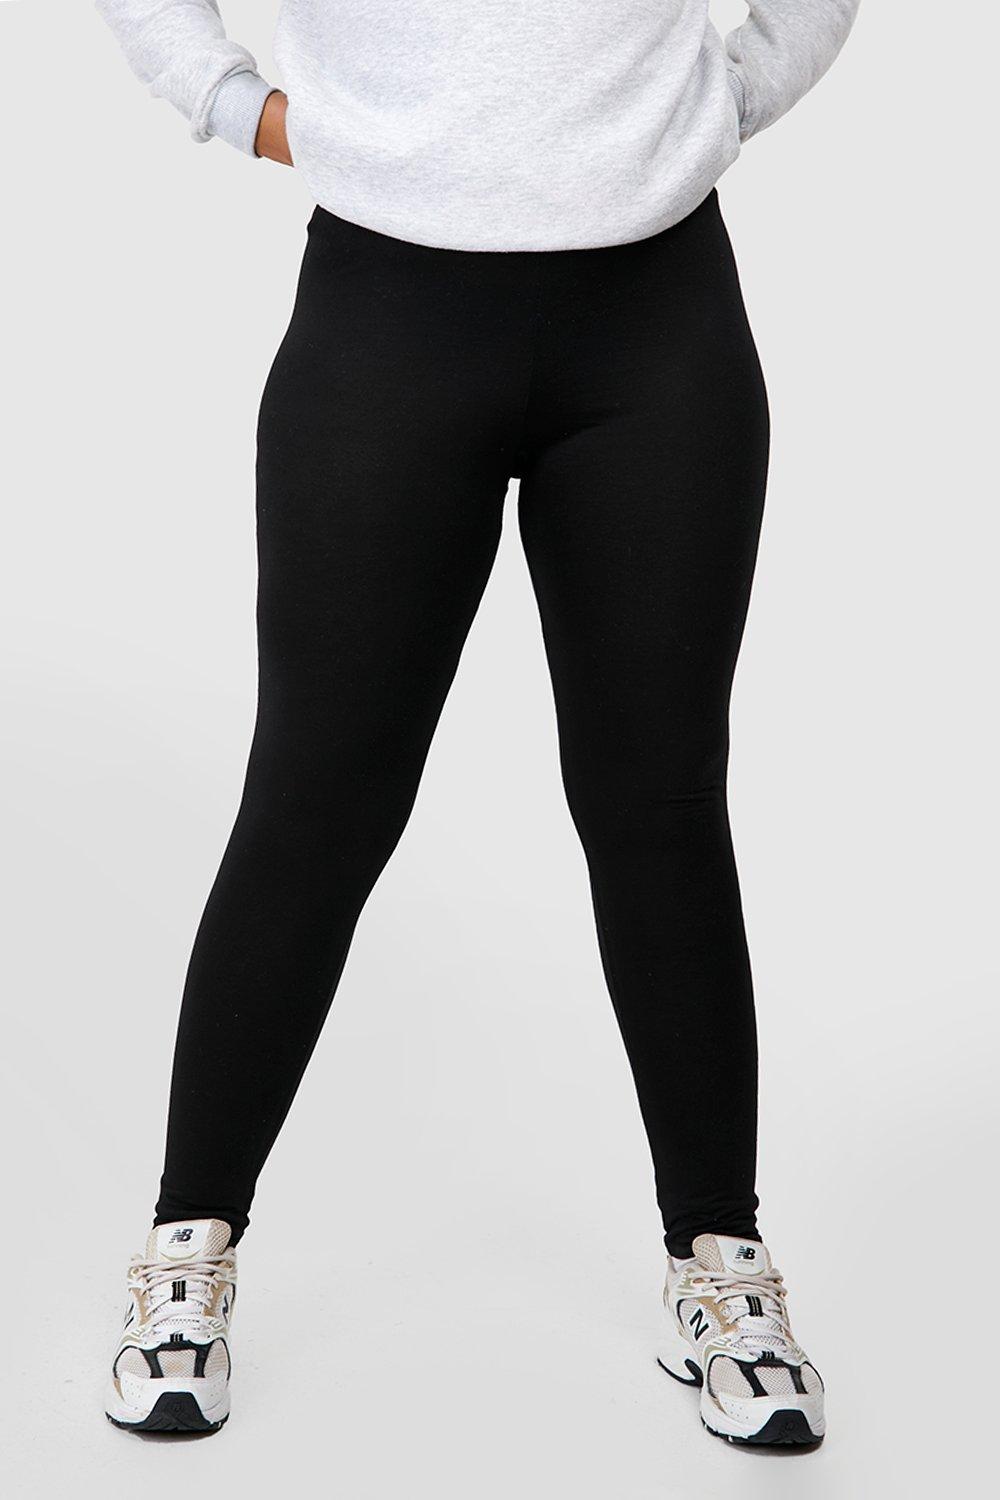 https://media.boohoo.com/i/boohoo/gzz02858_black_xl_3/female-black-plus-basic-cotton-mix-leggings